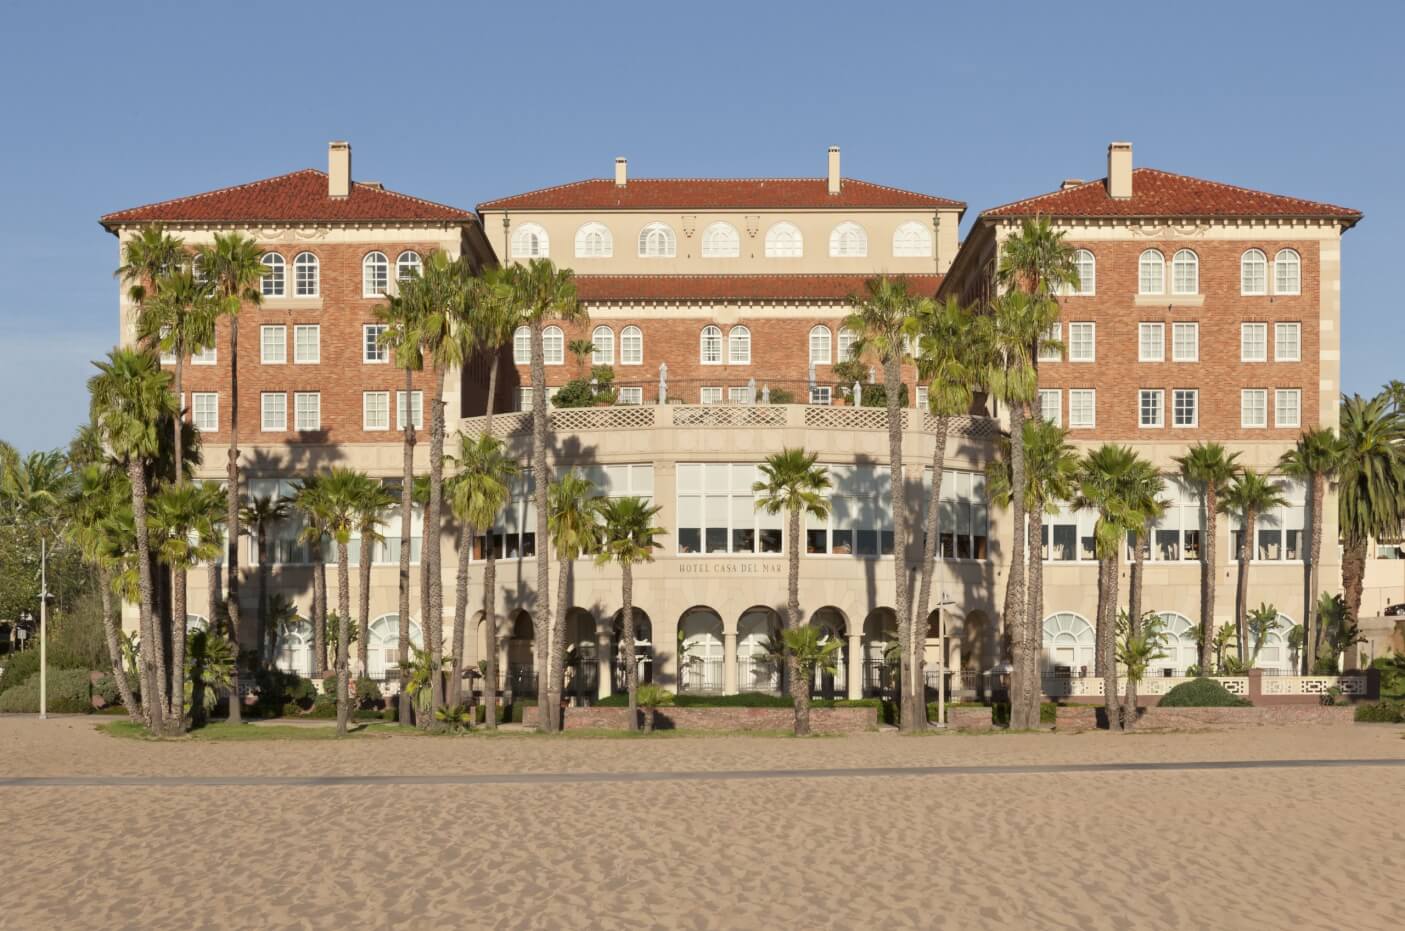 Hotel Casa Del Mar: The Epicenter of Springtime Diversions - Palisades News